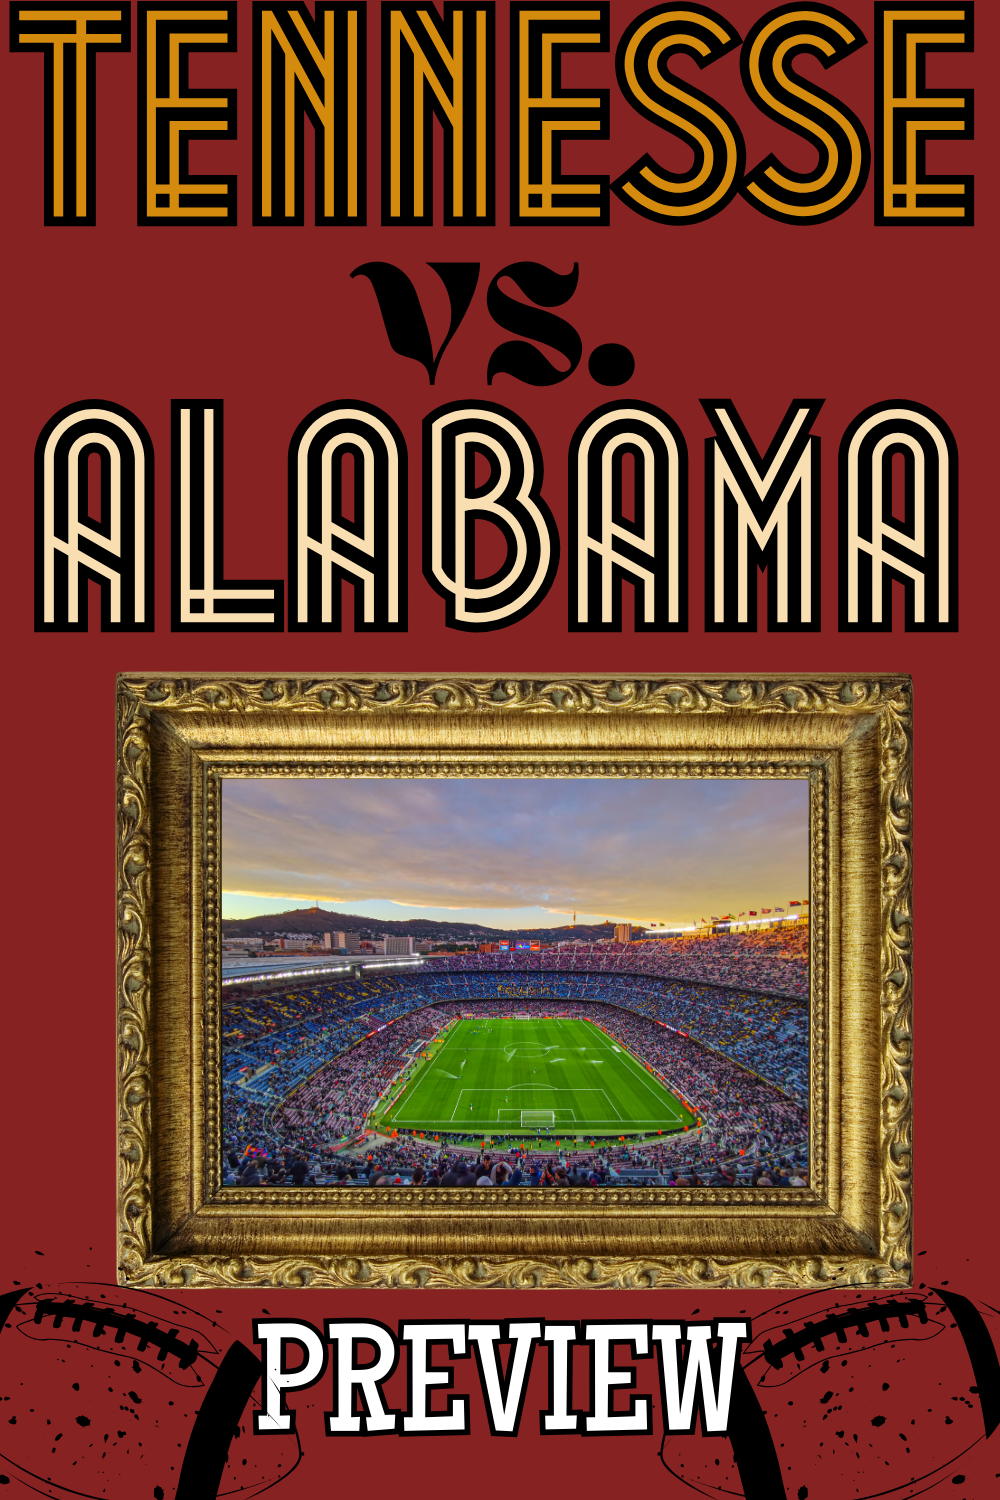 Tennessee Volunteers vs. Alabama Football Showdown